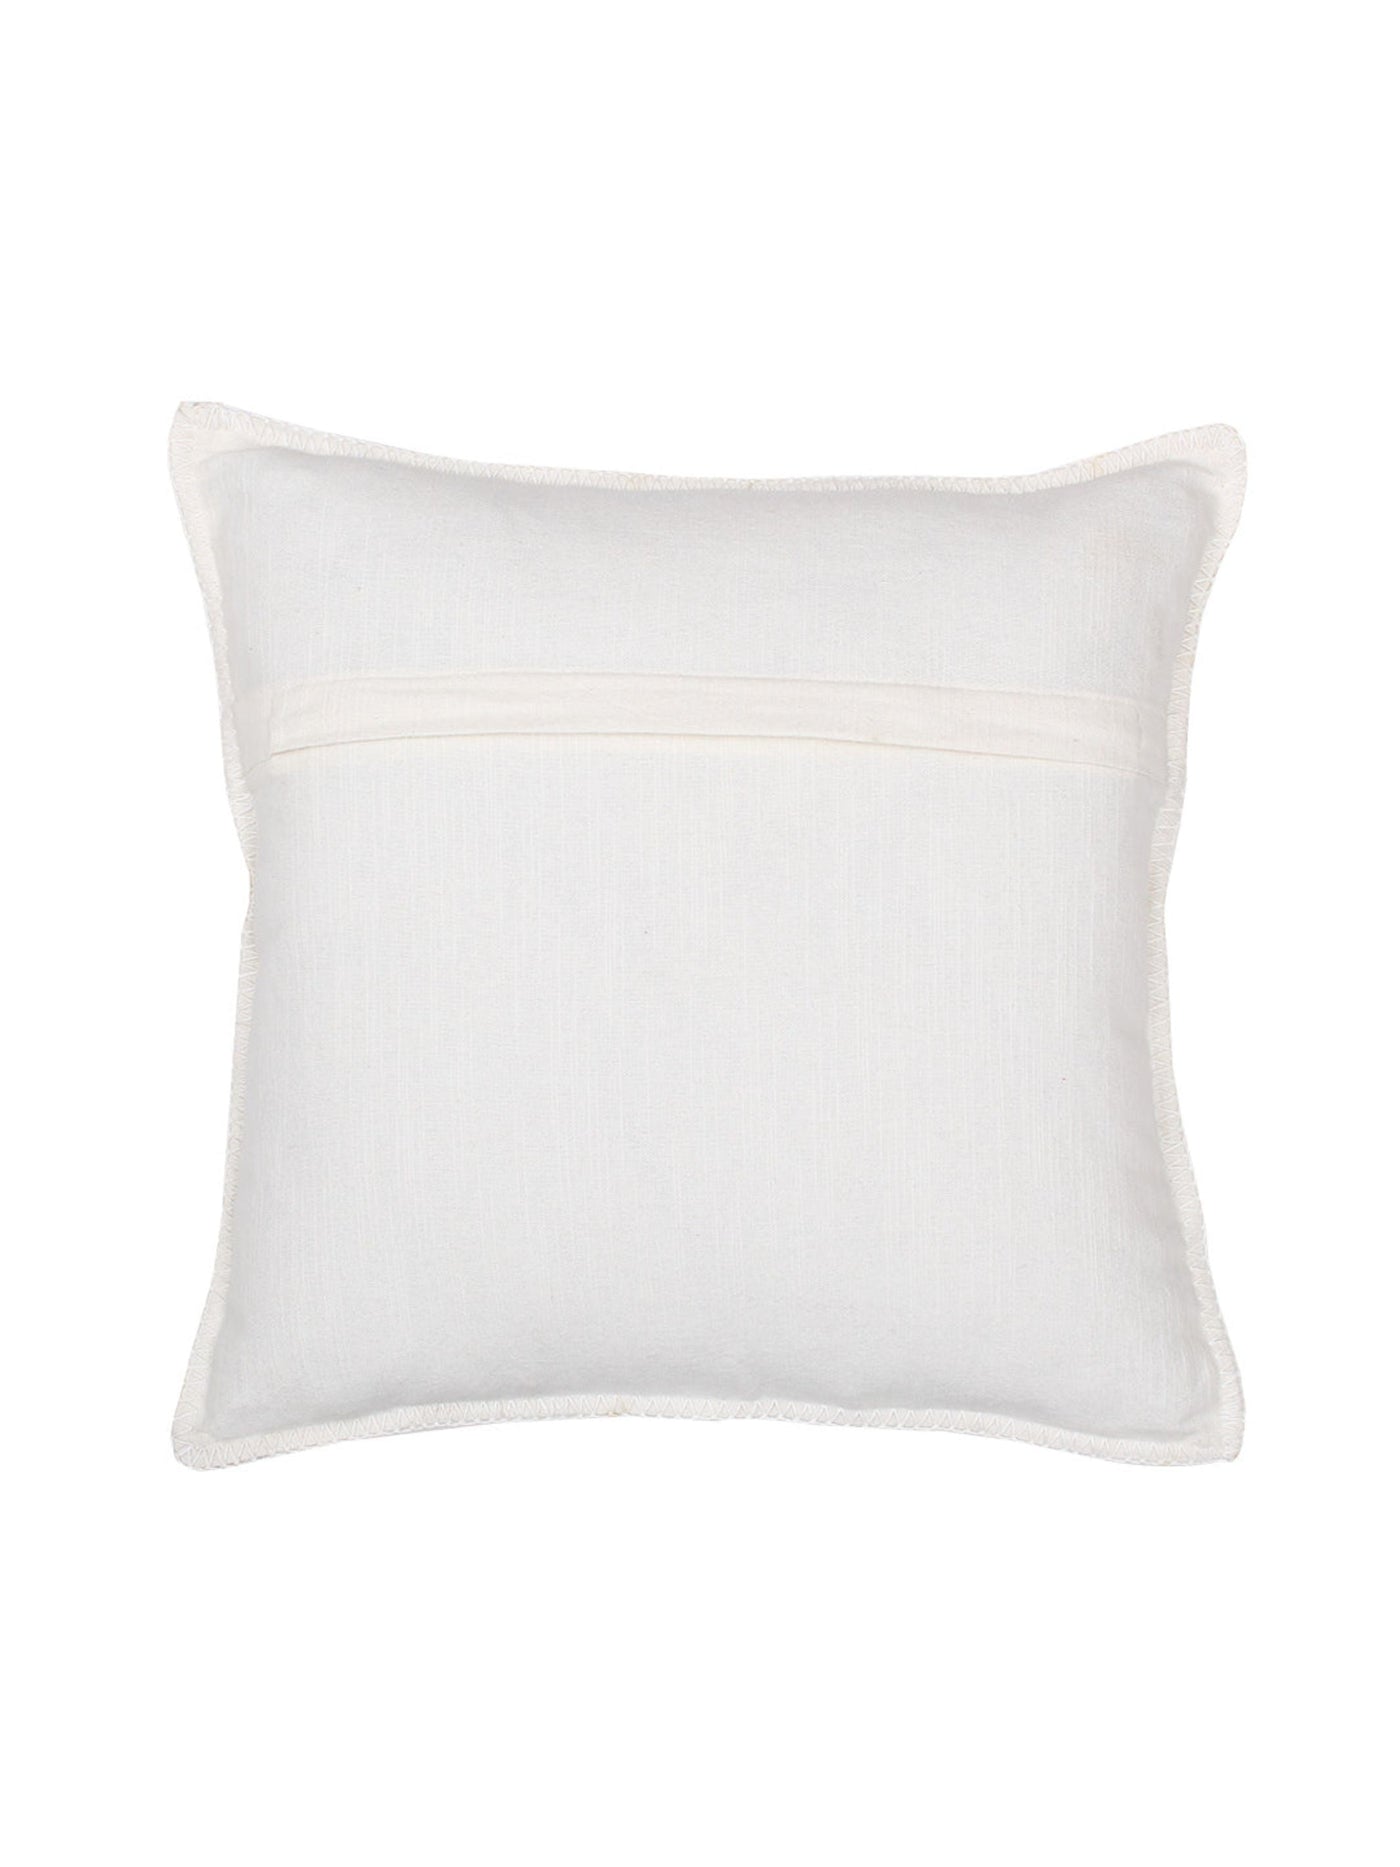 Cushion Cover - Vindhya (Natural)